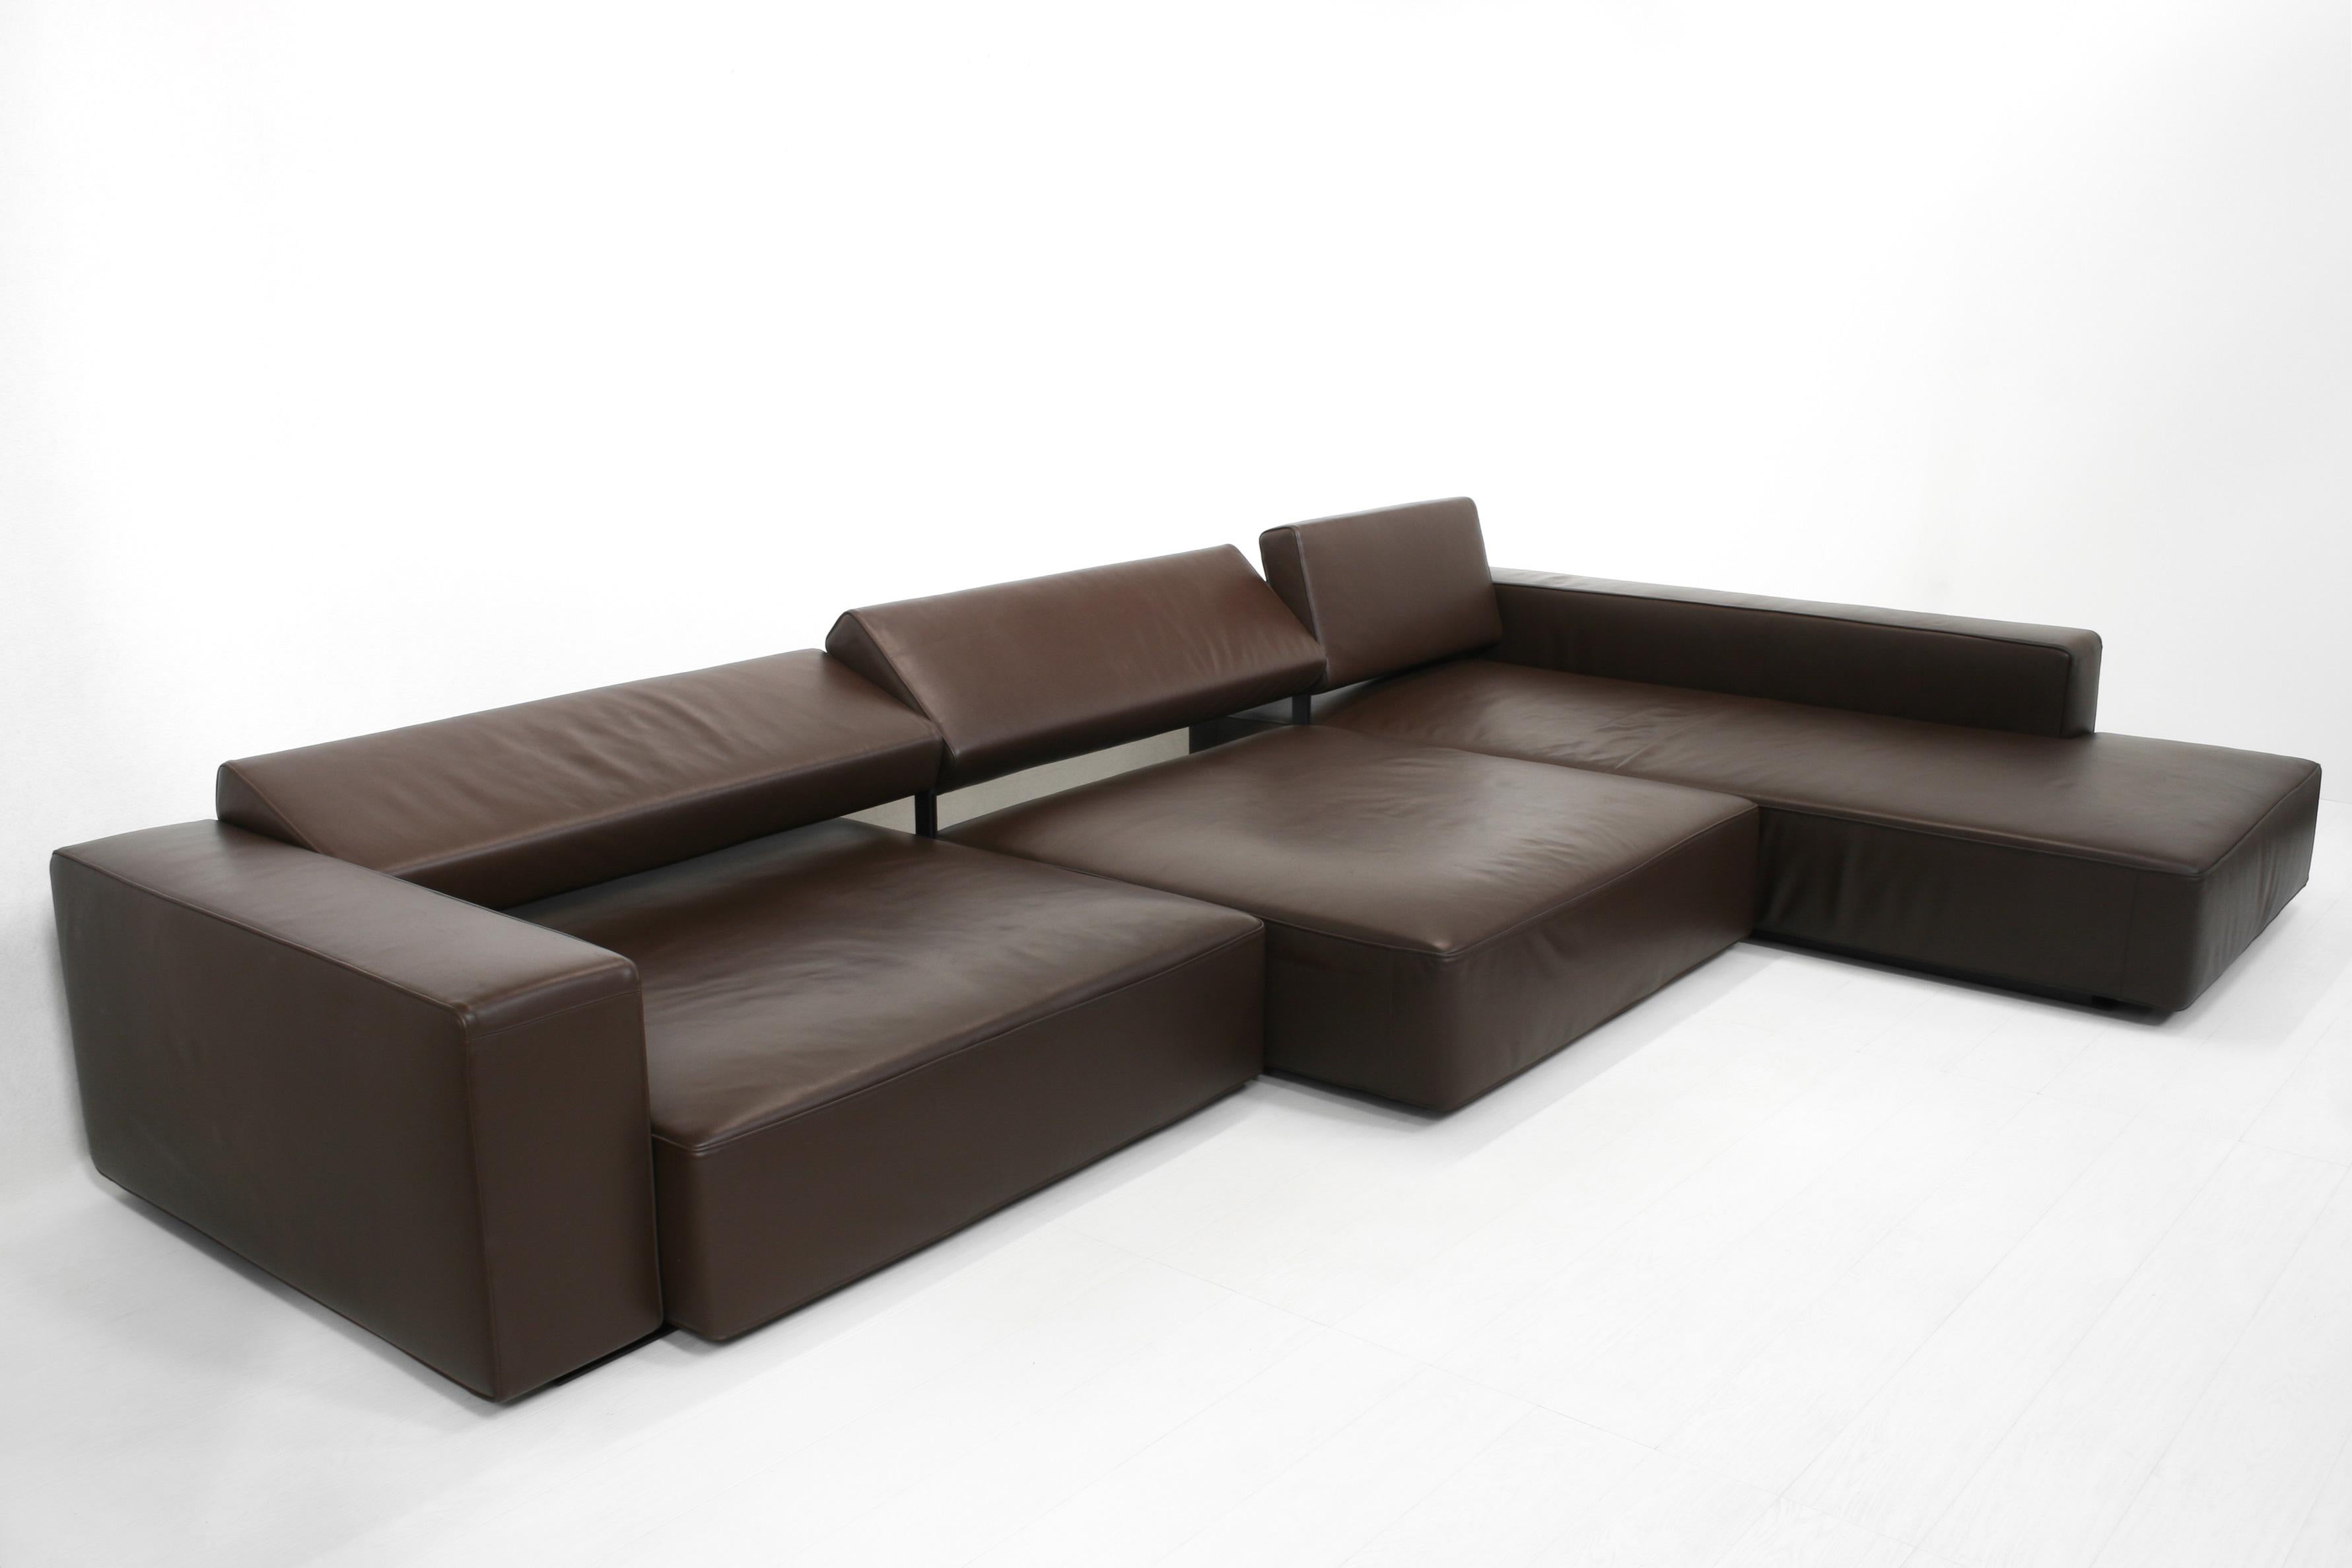 Italian Modular Leather Andy Landscape Sofa by Paolo Piva for B&B Italia